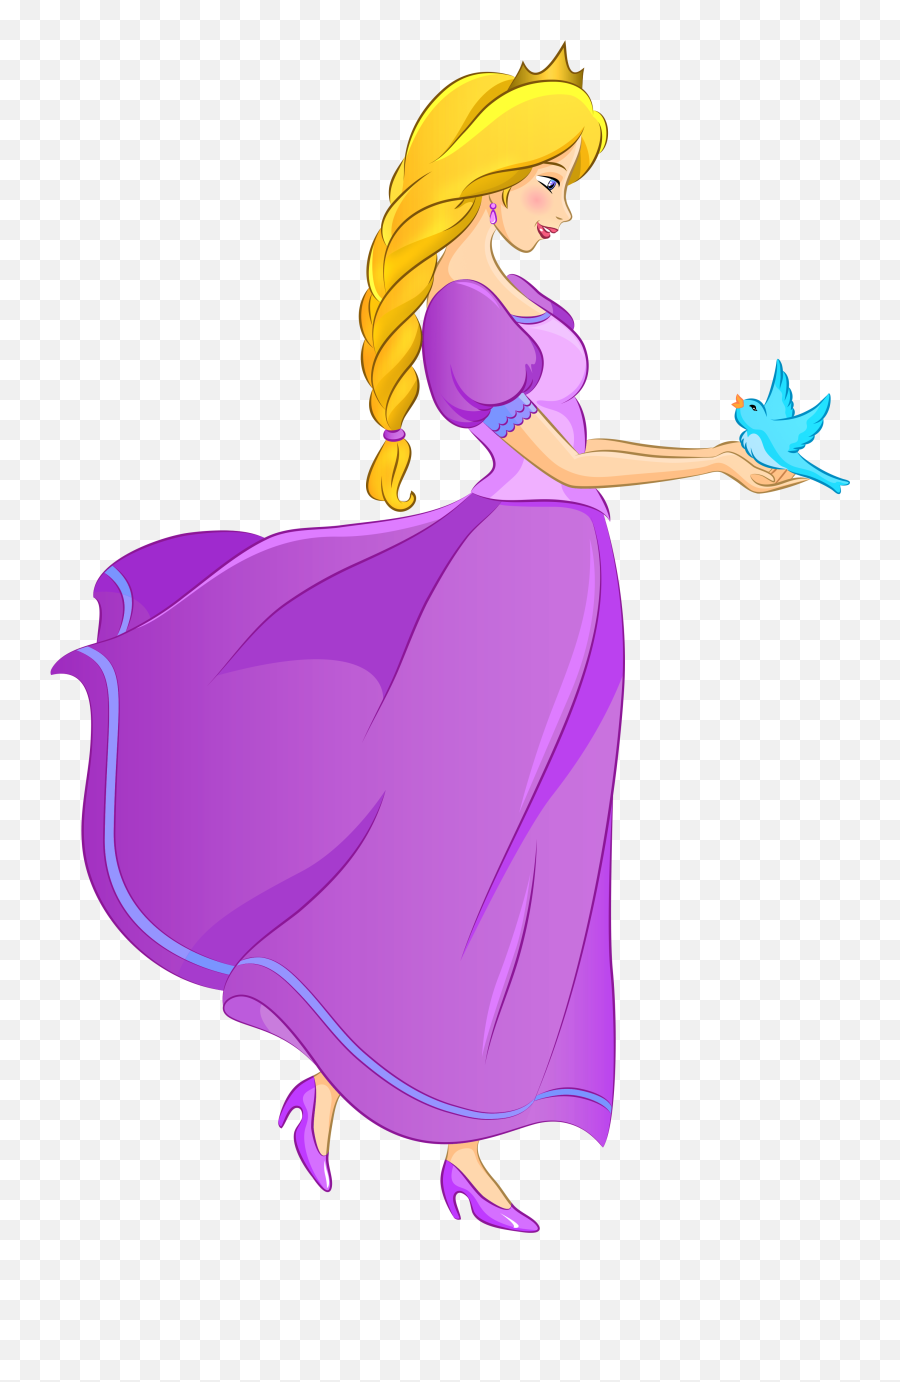 Free Princess Clipart Pictures - Clipartix Cute Princess Cartoon Character Emoji,Disney Castle Clipart